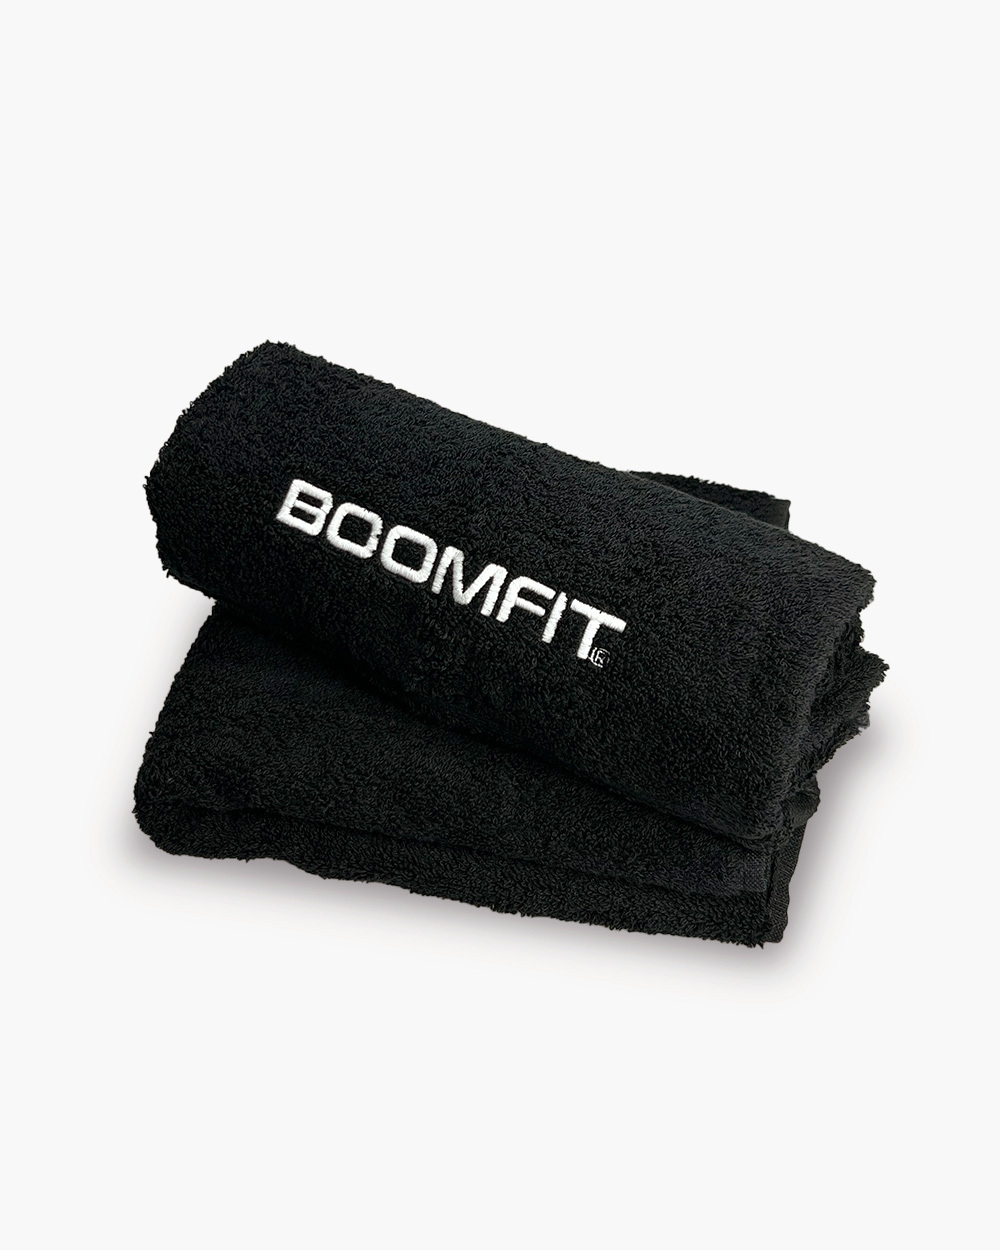 https://static-content-2.boomfit.com/23975-large_default/black-gym-towel-boomfit.jpg